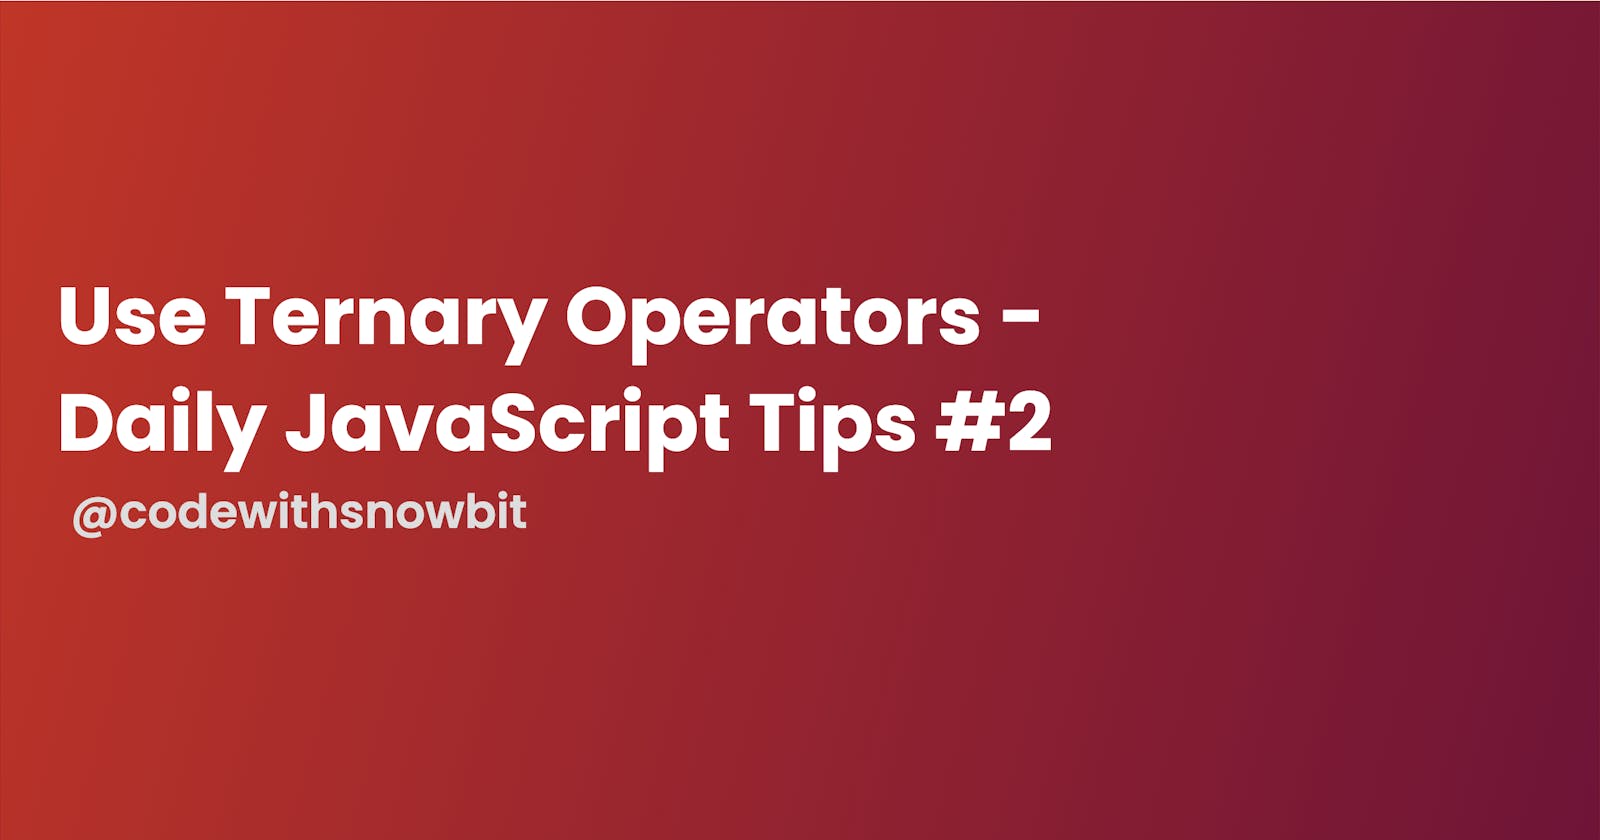 Use Ternary Operators - Daily JavaScript Tips #2